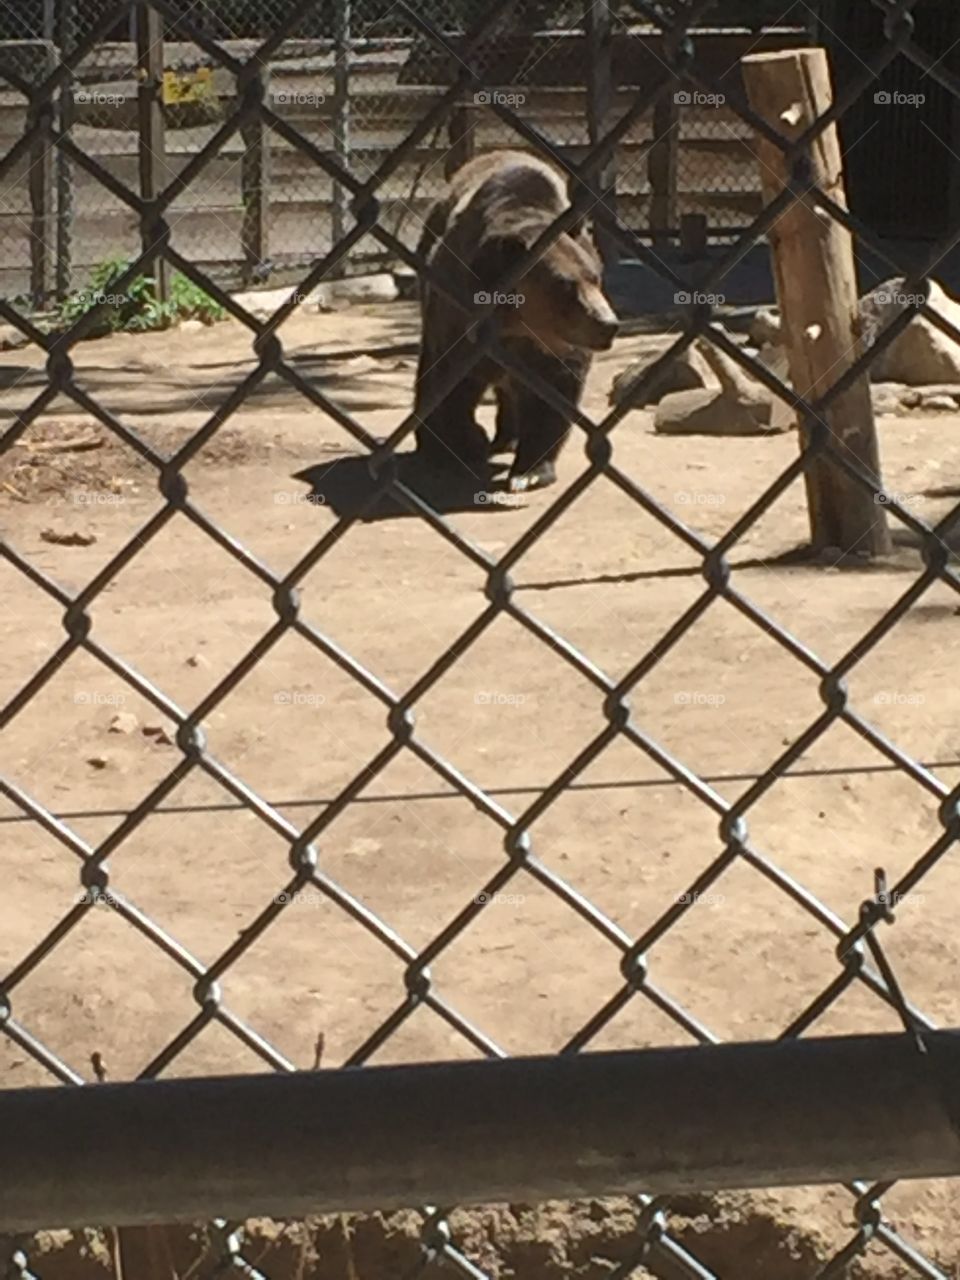 A bear at the zoo in big bear